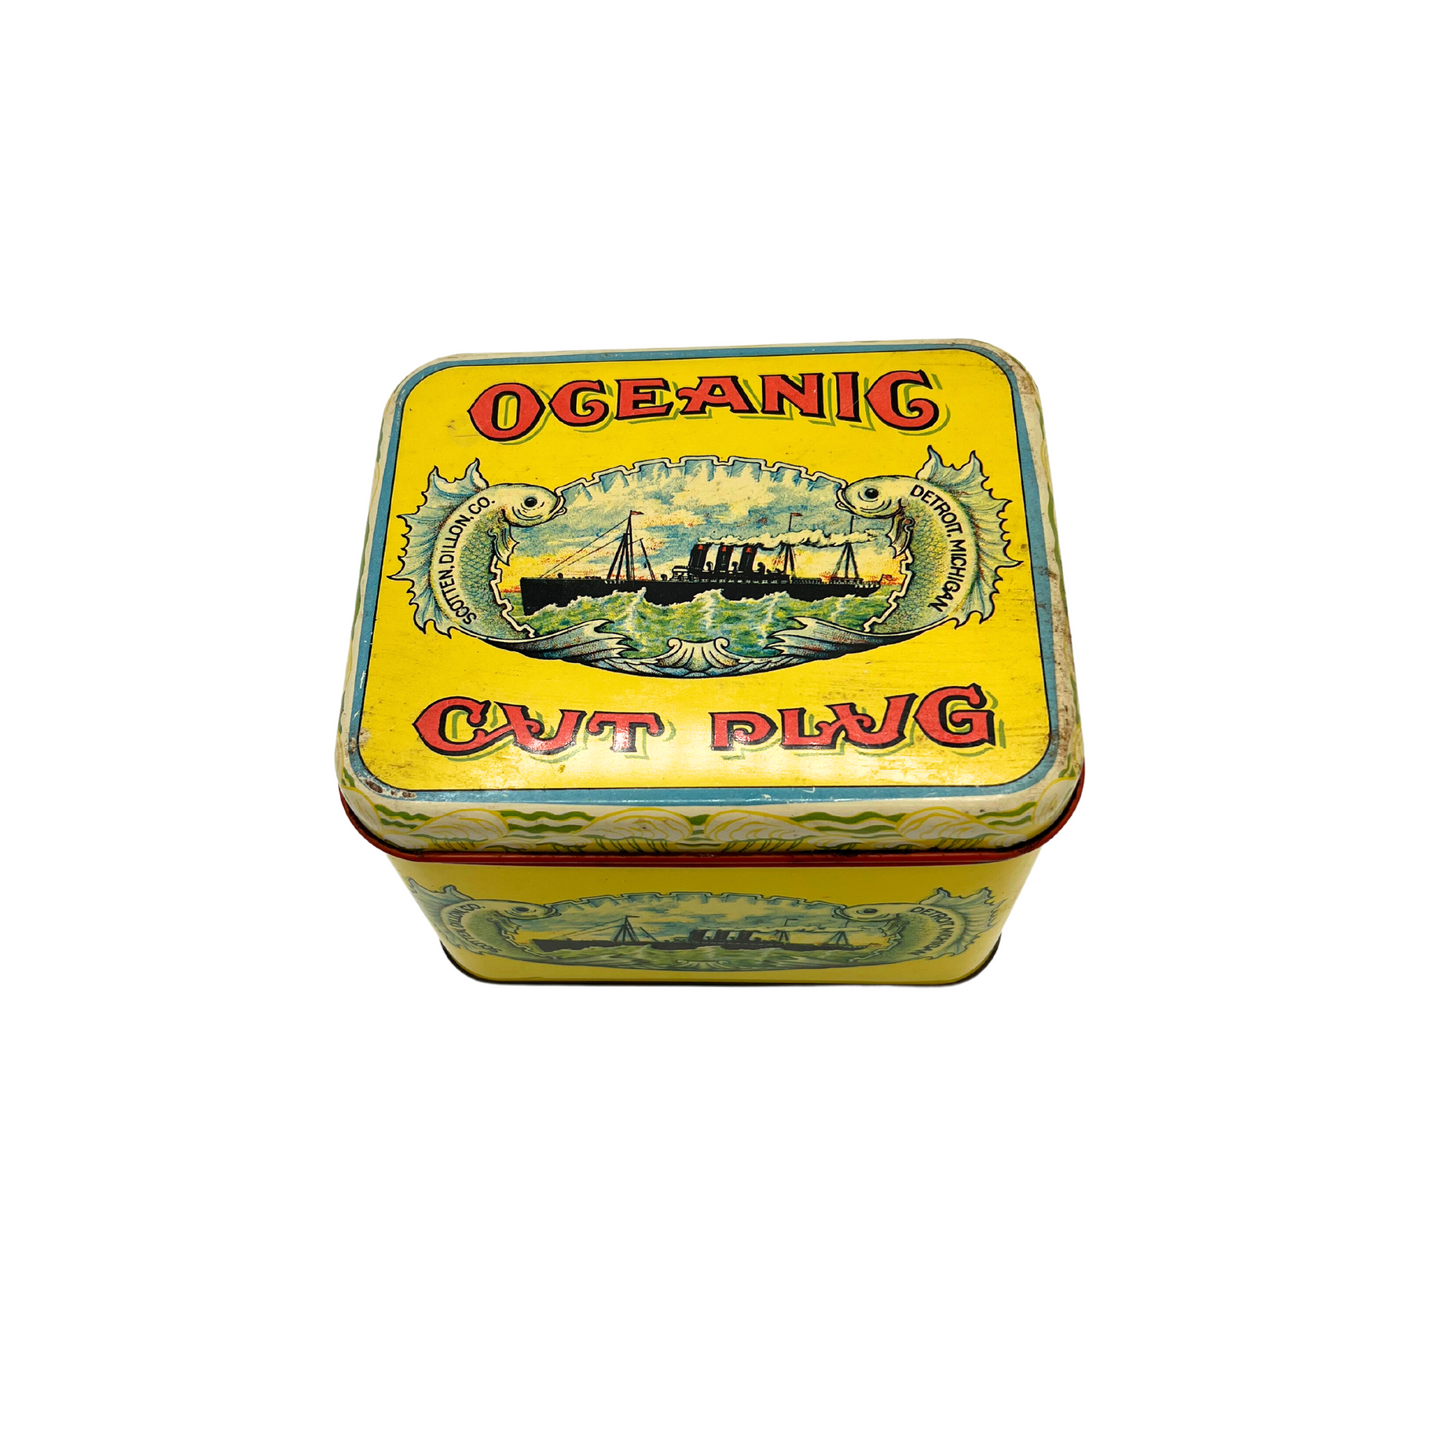 1970s Oceanic Cut Plug tobacco tin